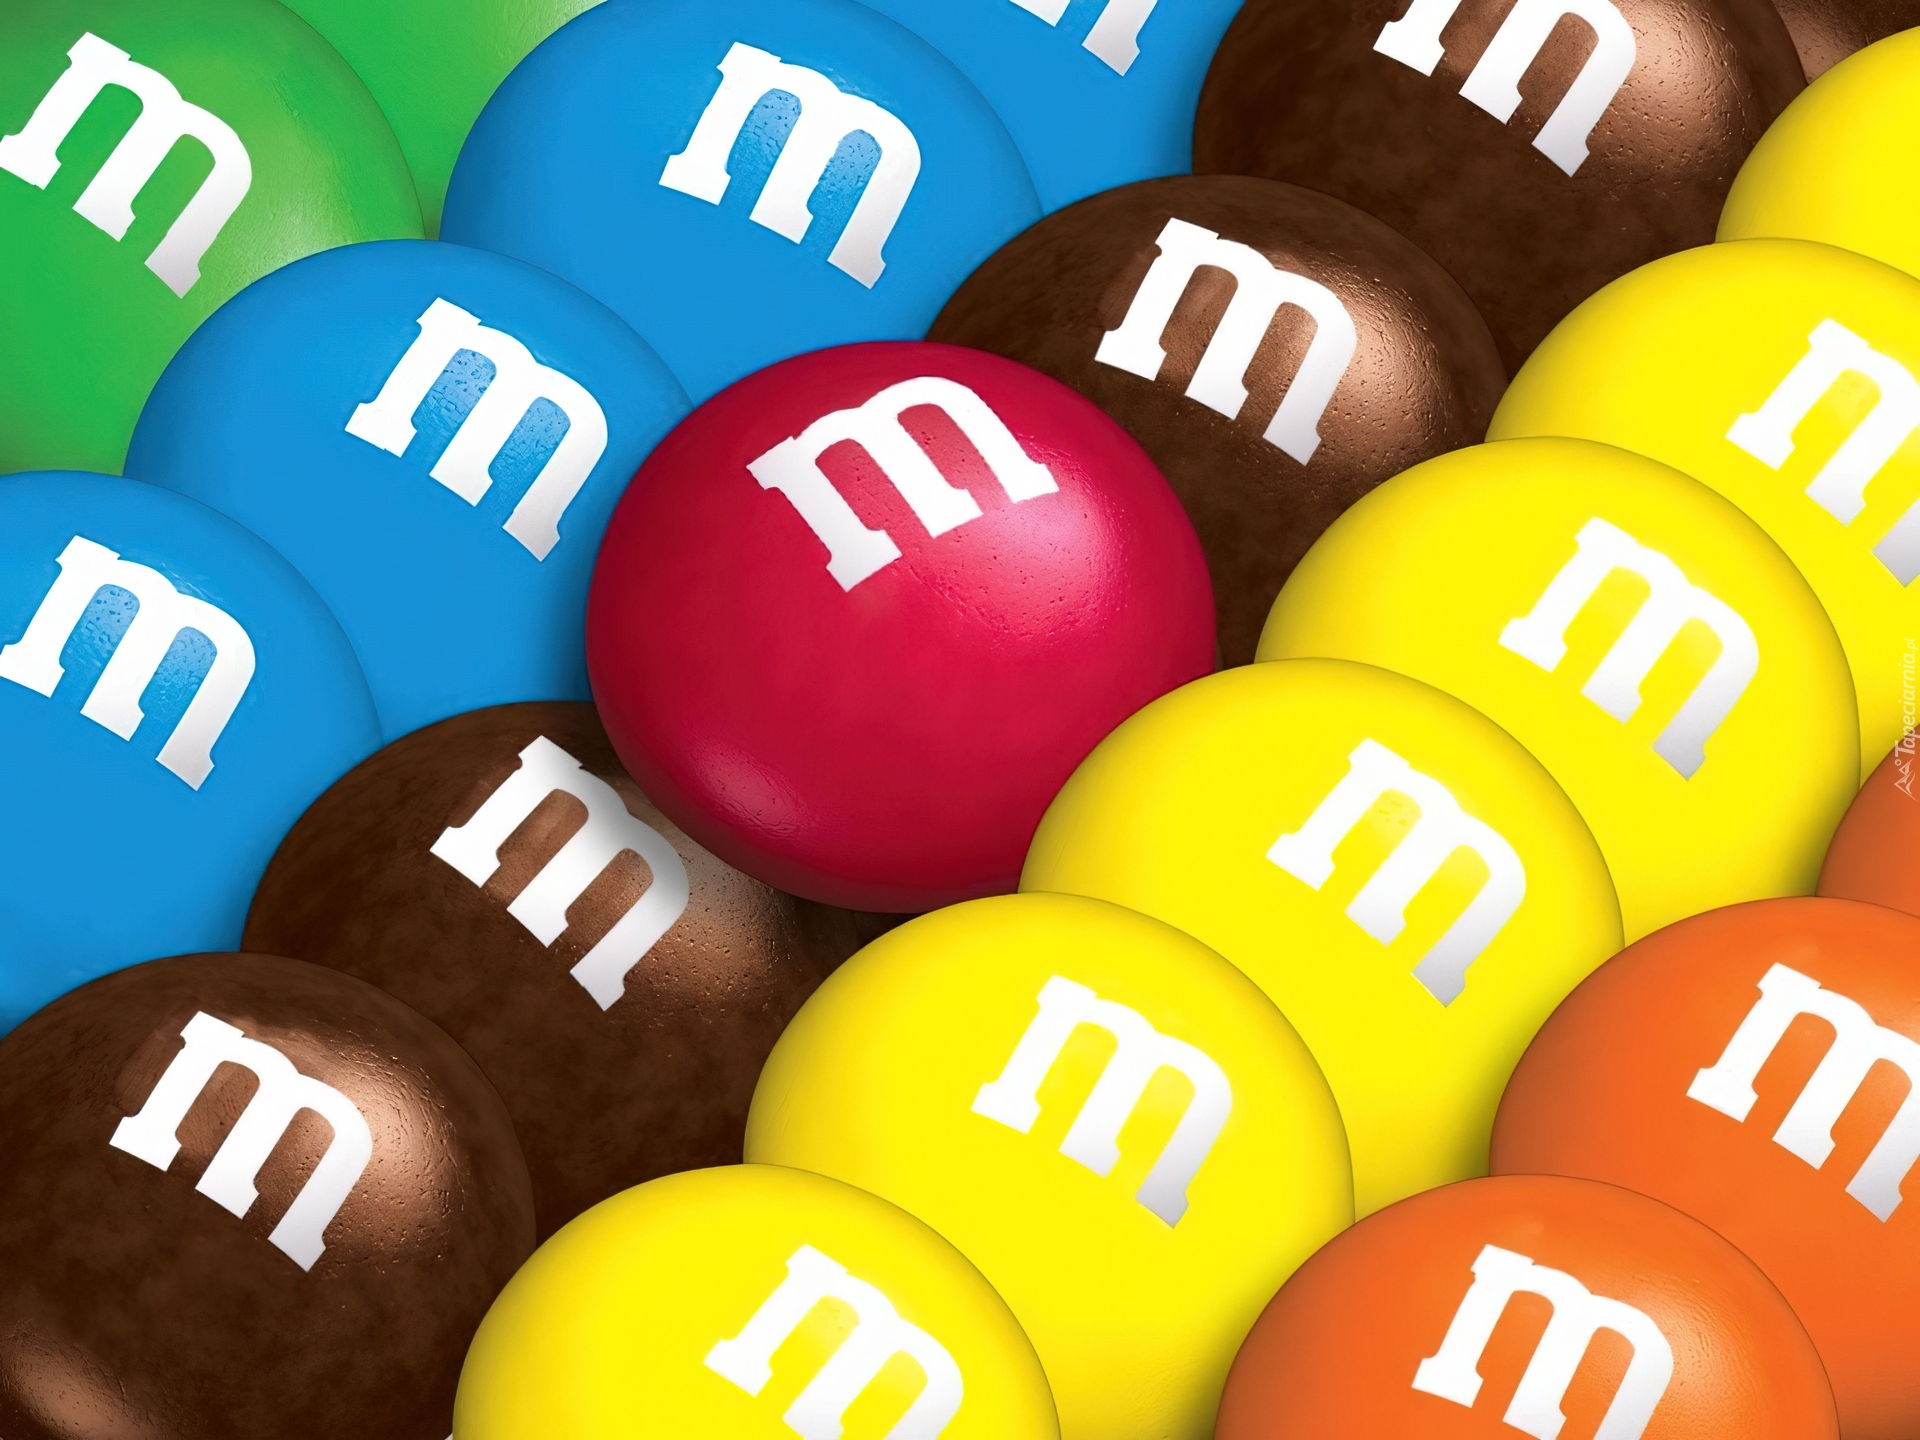 Https materials m. Эмемдемс. M&M’S. ЭМЭНДЭМС конфеты. M&MS цвета.